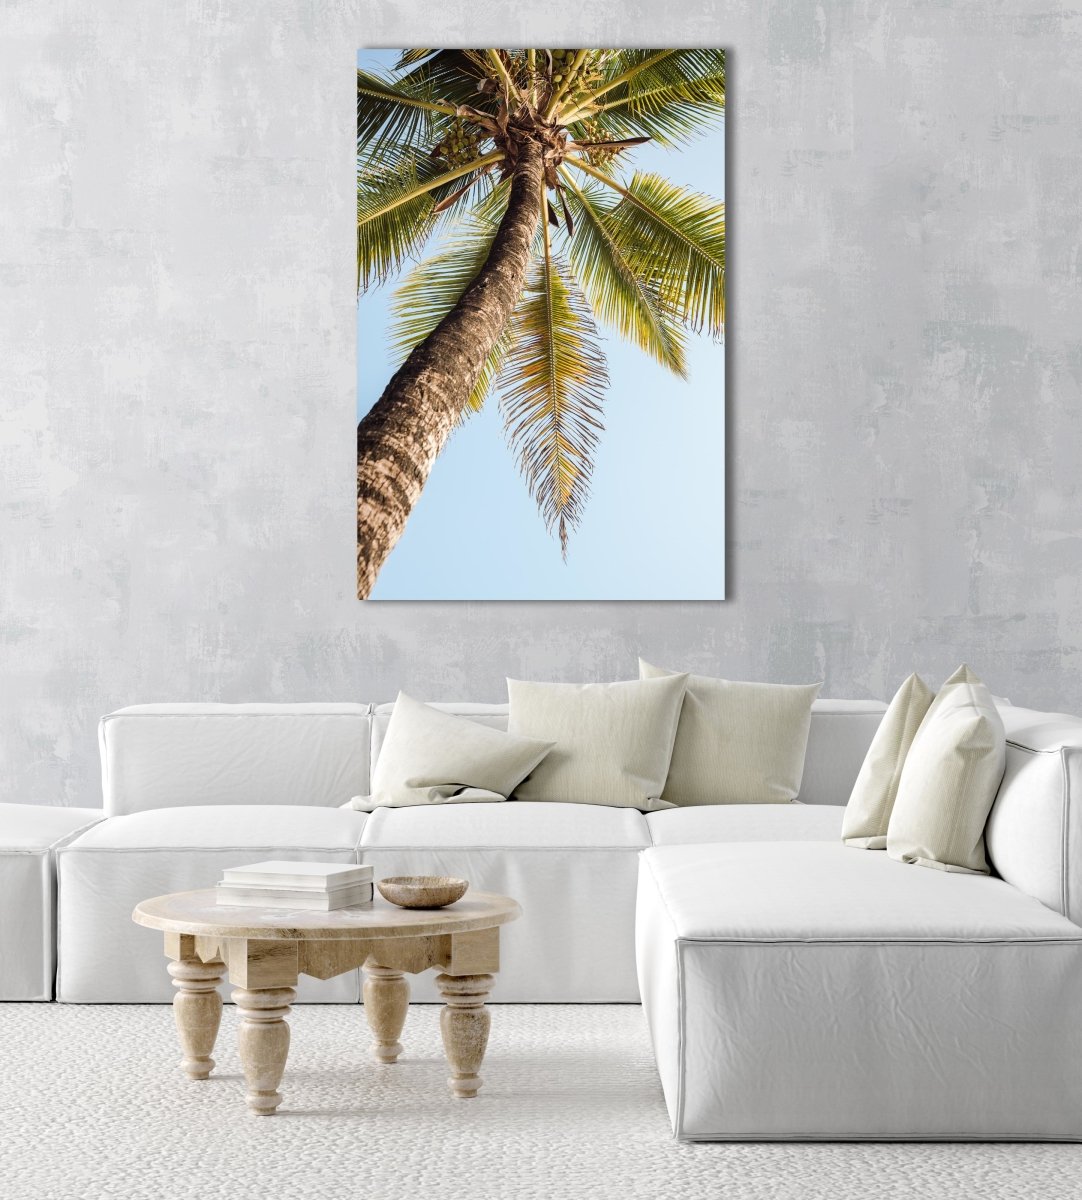 One palm tree on malindi beach in kenya in an acrylic/perspex frame